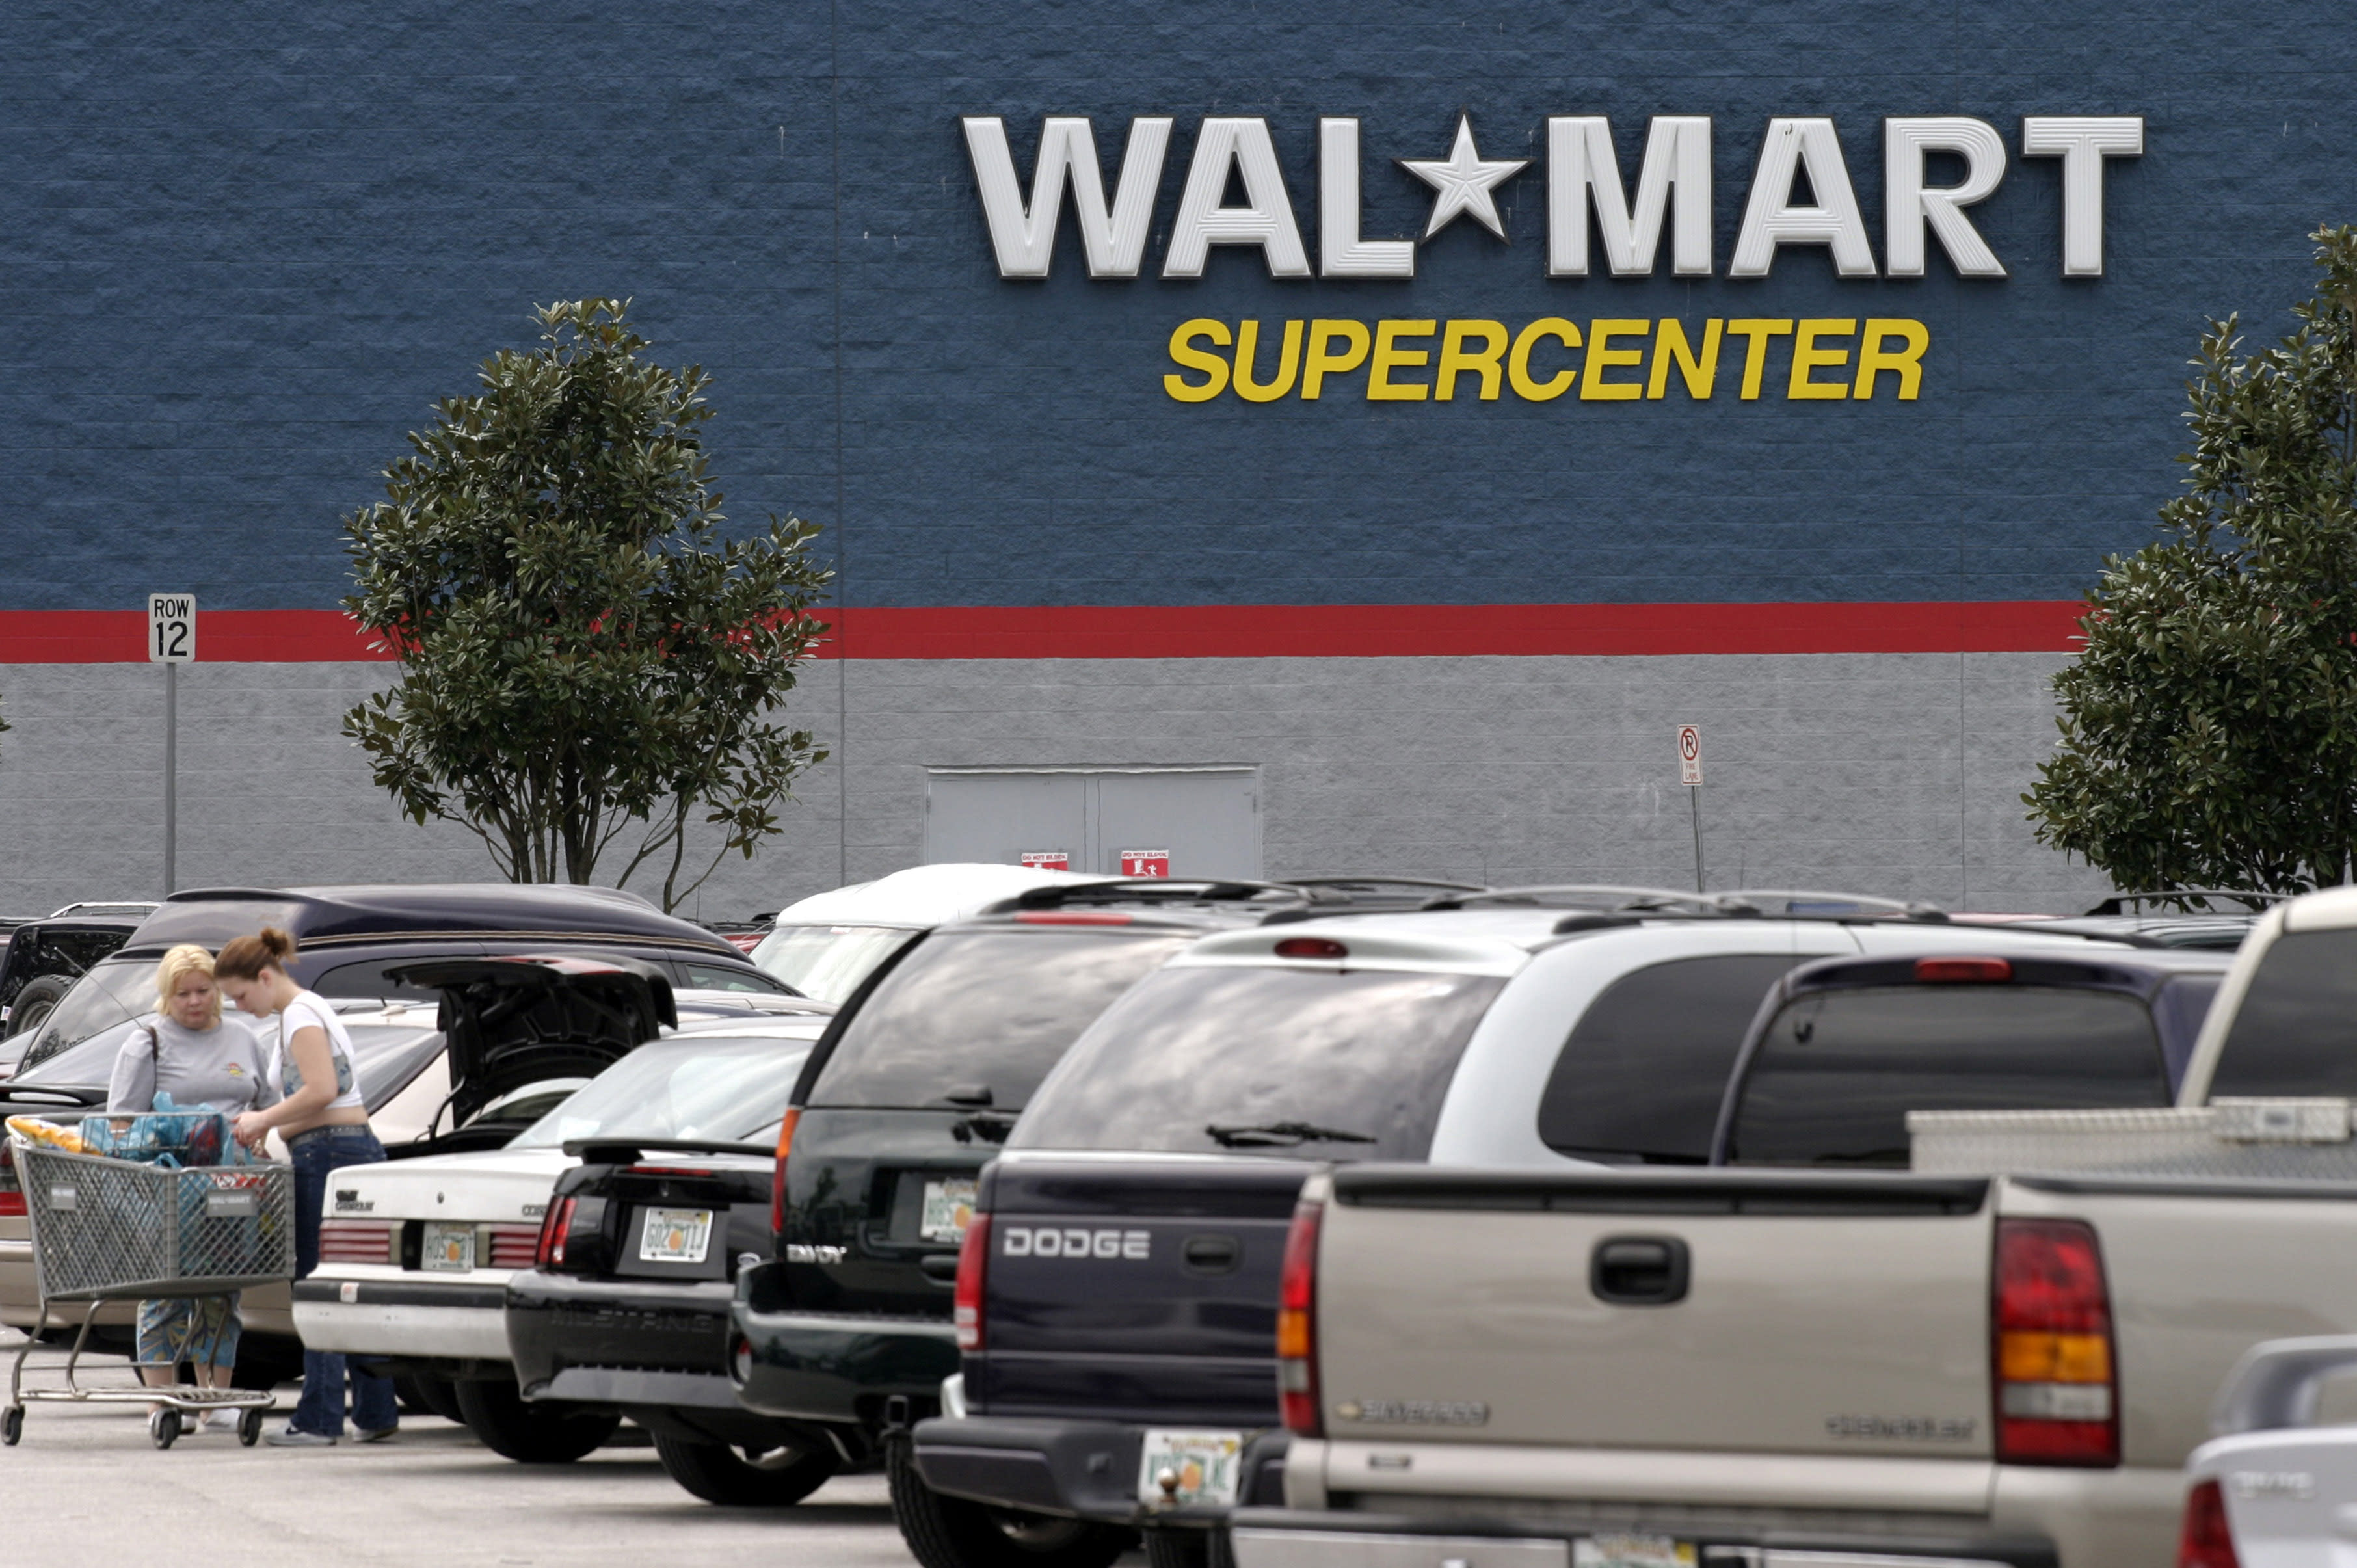 Walmart lança entrega gratuita para o dia seguinte nos EUA - Mercado&Consumo